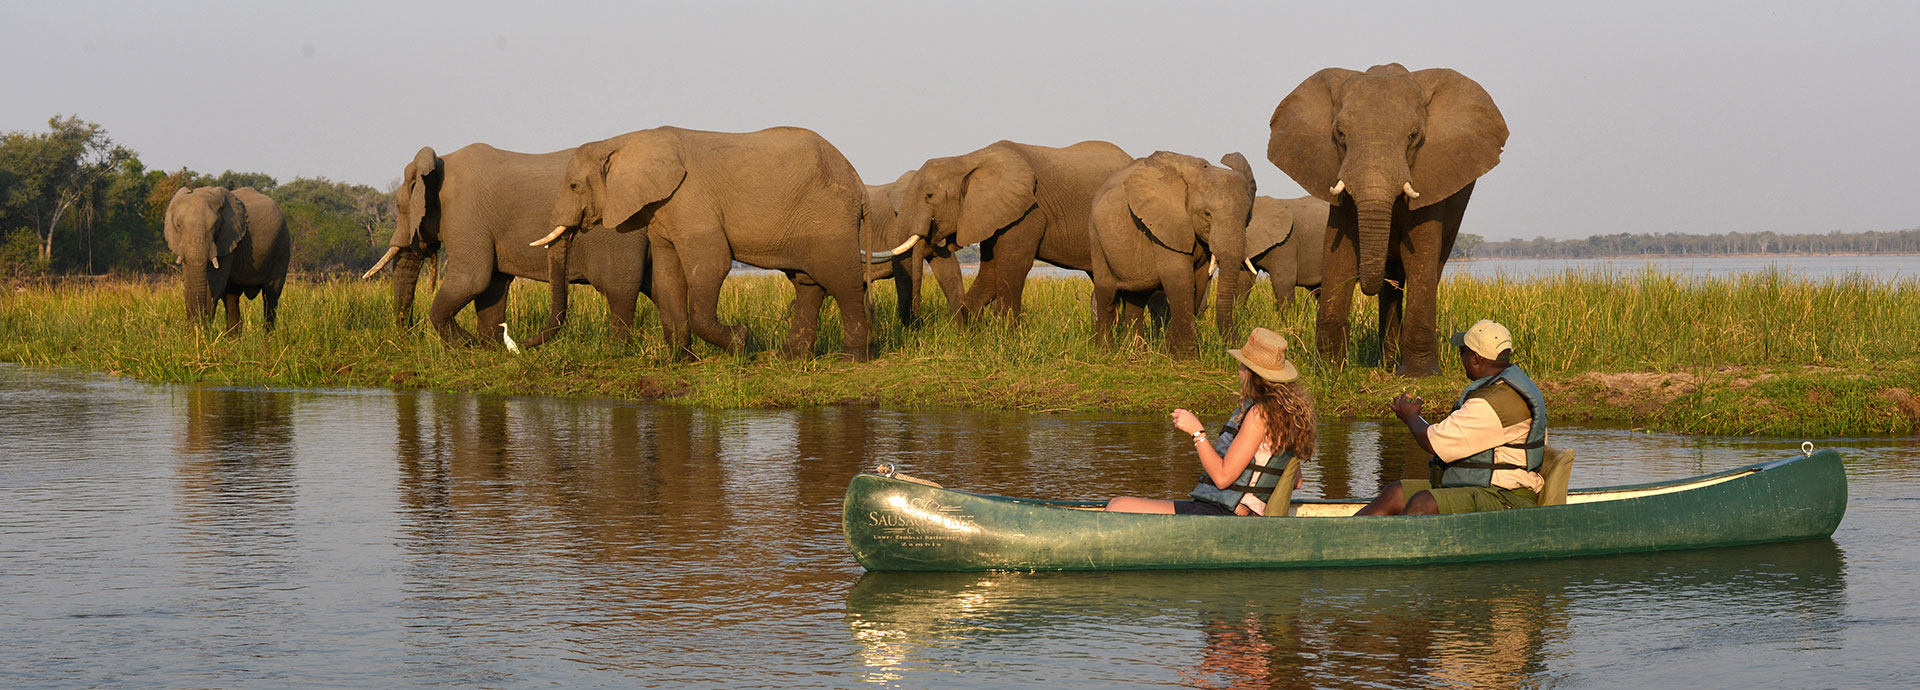 Sausage Tree Camp offers adventurous safari activities, including canoeing on the Zambezi River